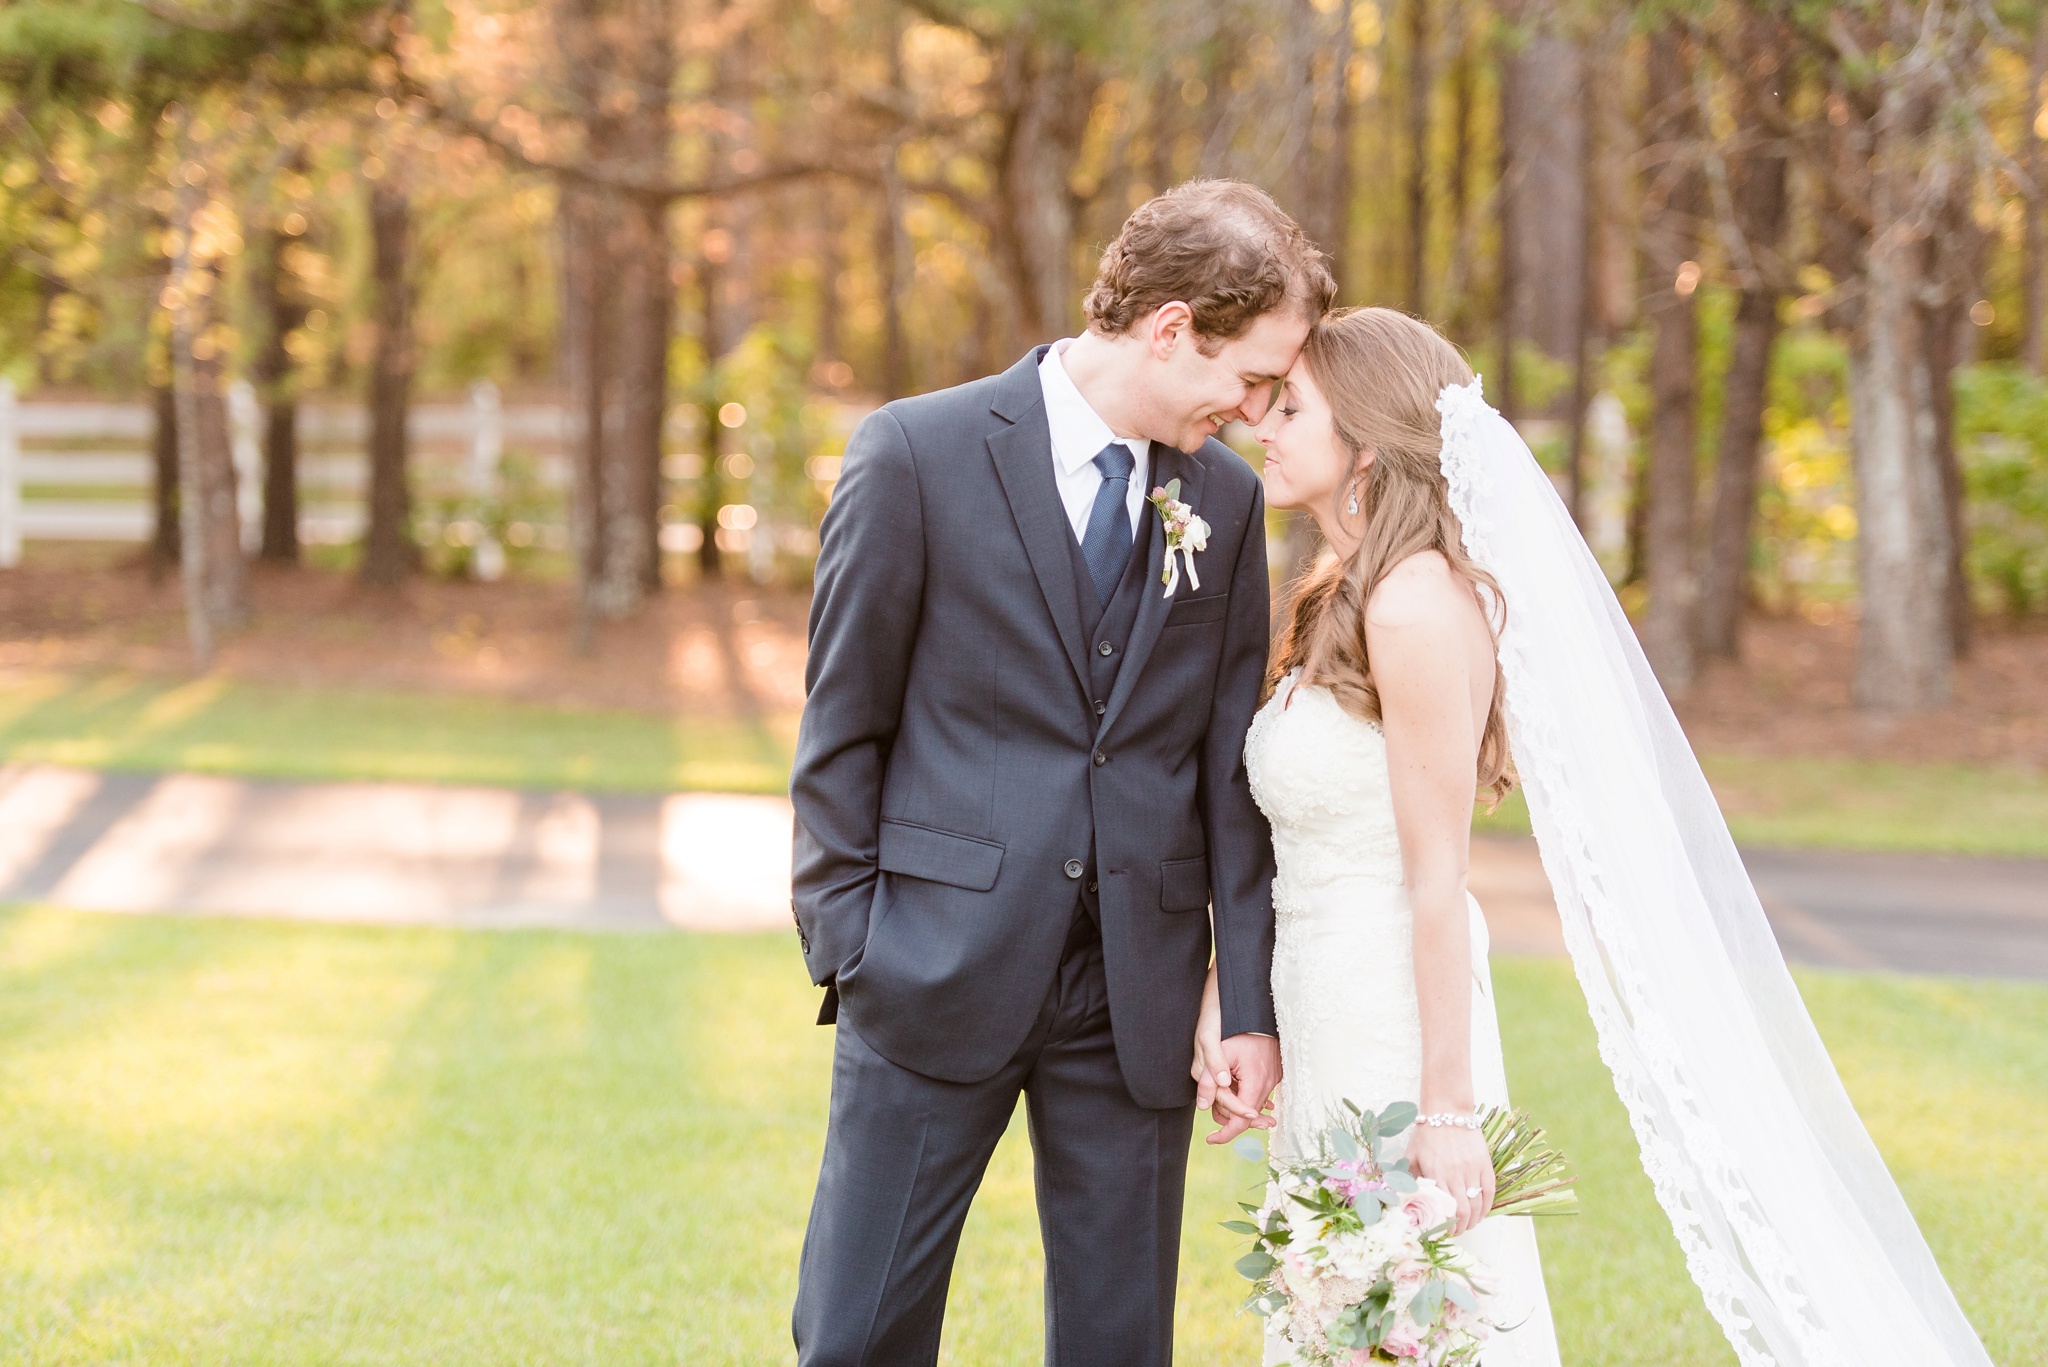 Sonnet House Blush and Gold Spring Wedding | Birmingham Alabama Wedding Photographers_0073.jpg